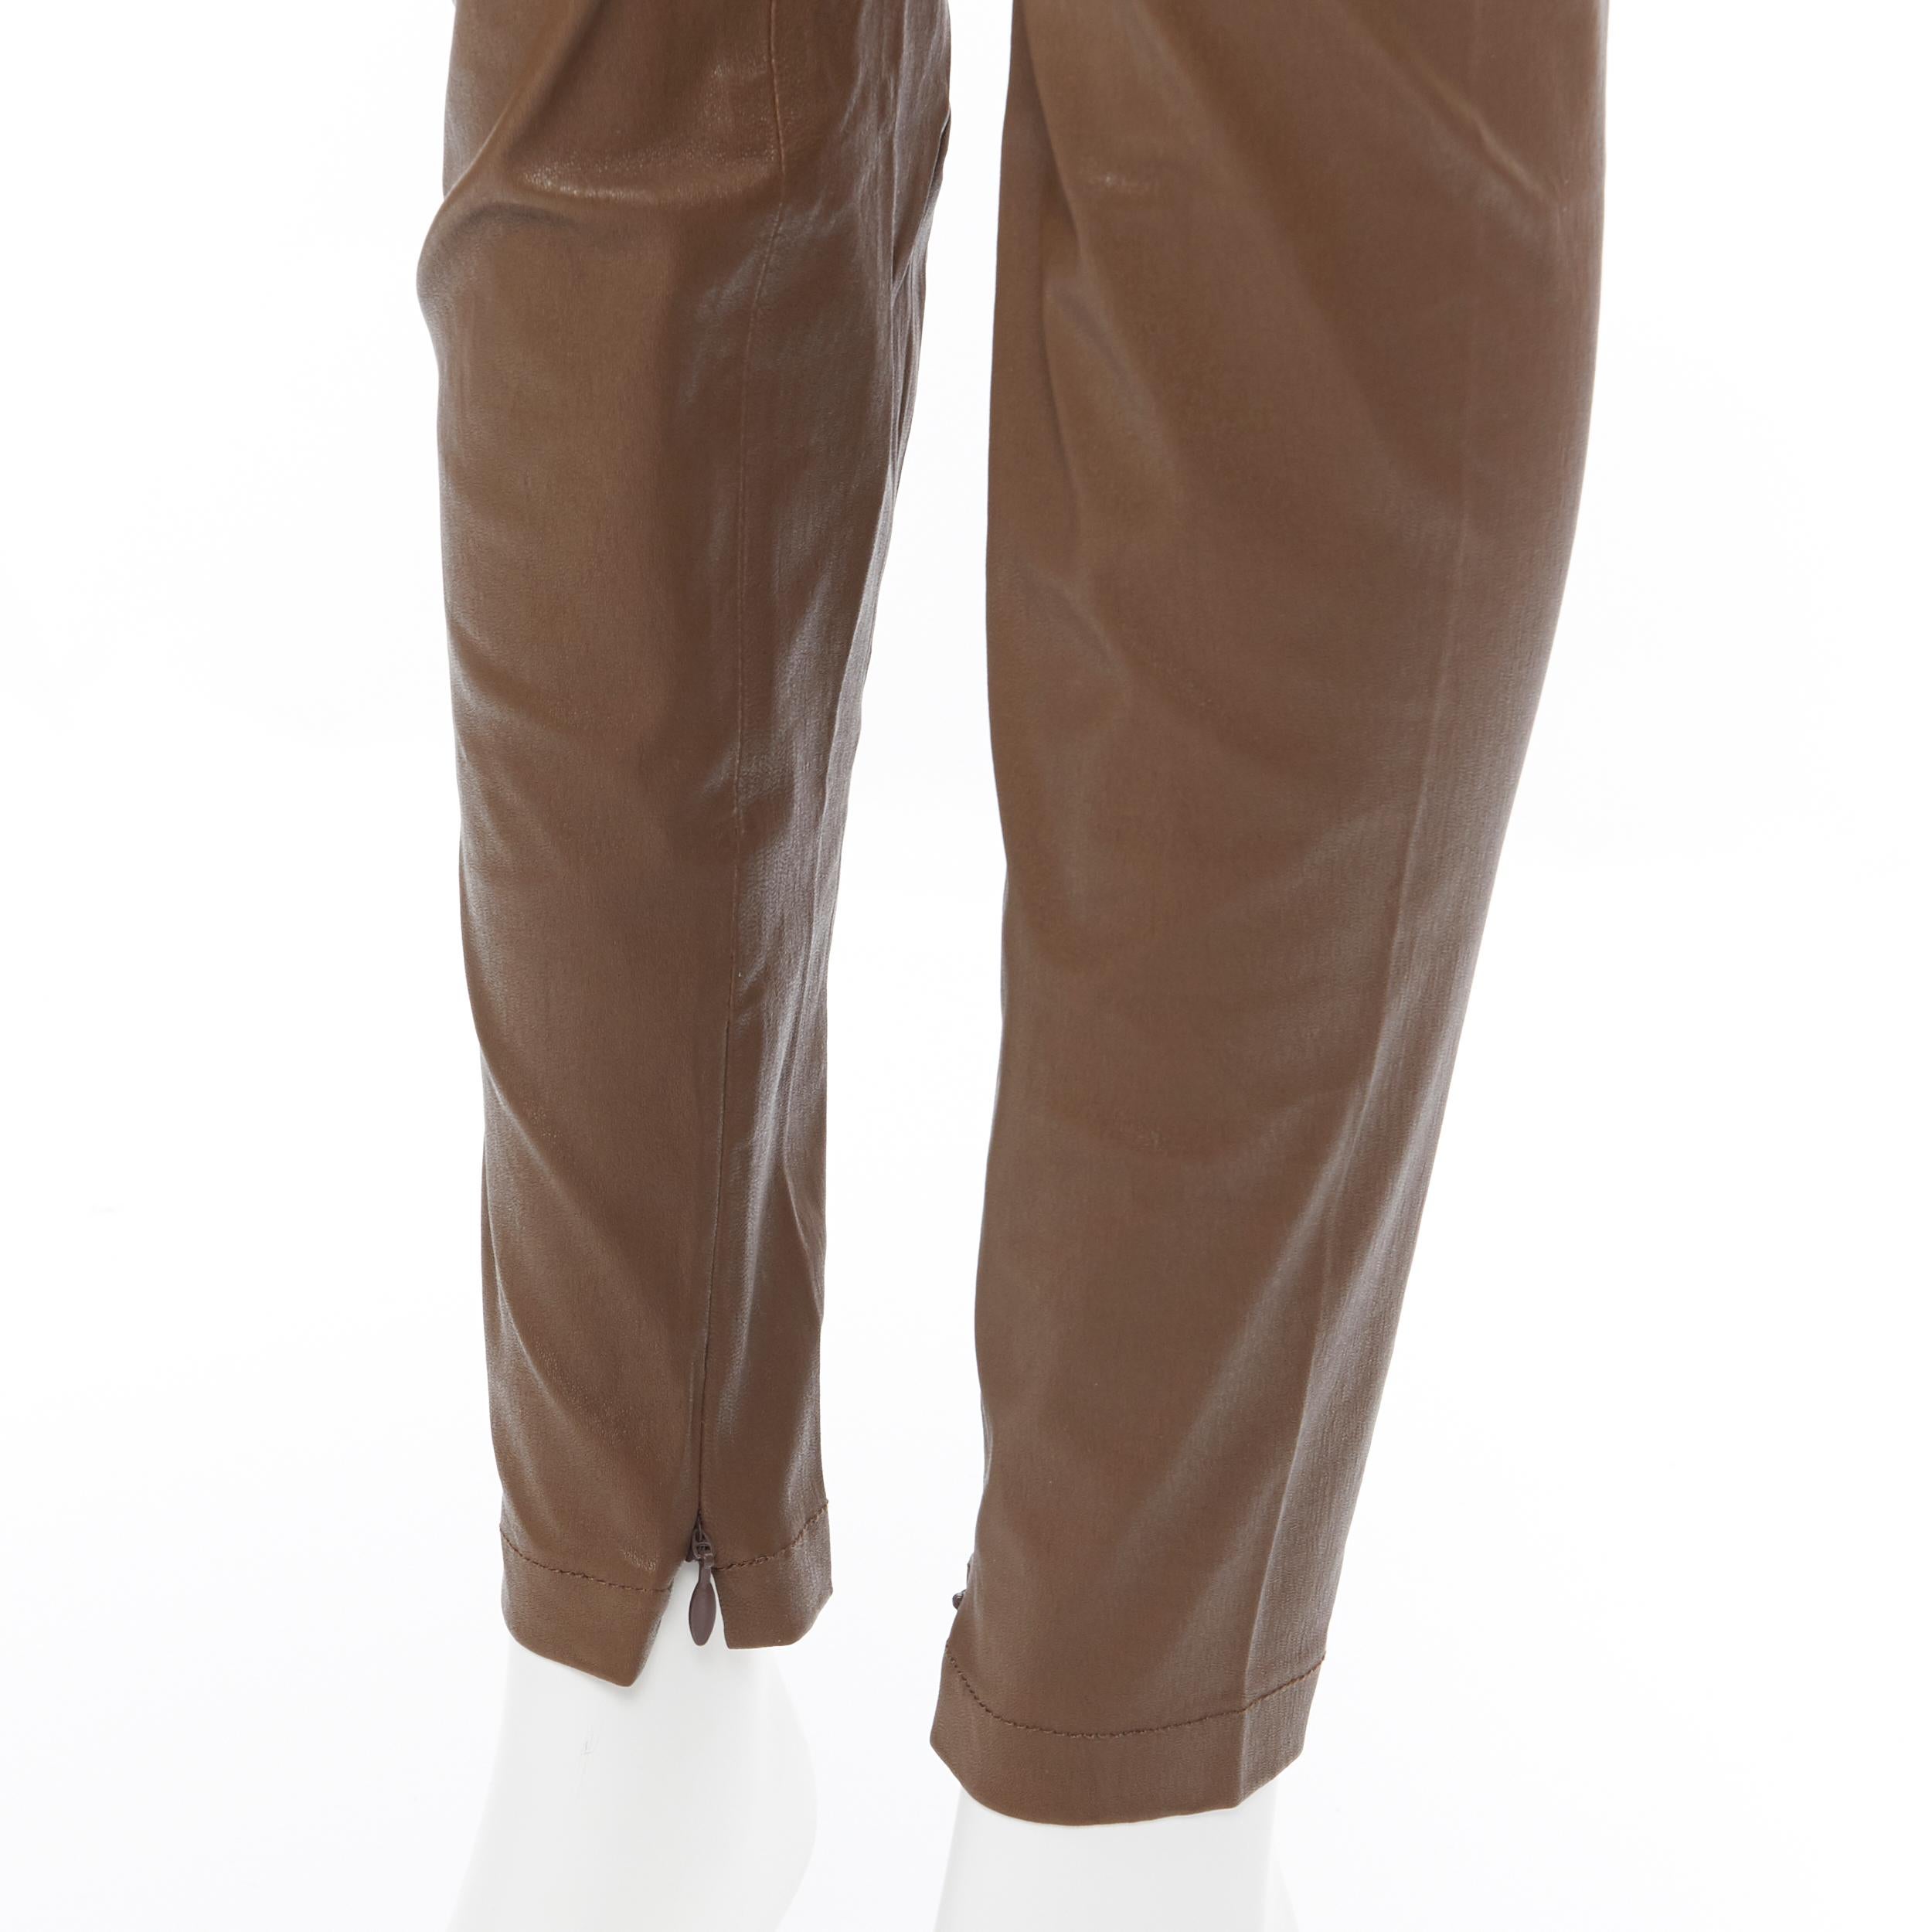 VINCE 100% leather tan brown minimal stretchy skinny leg pants XS 3